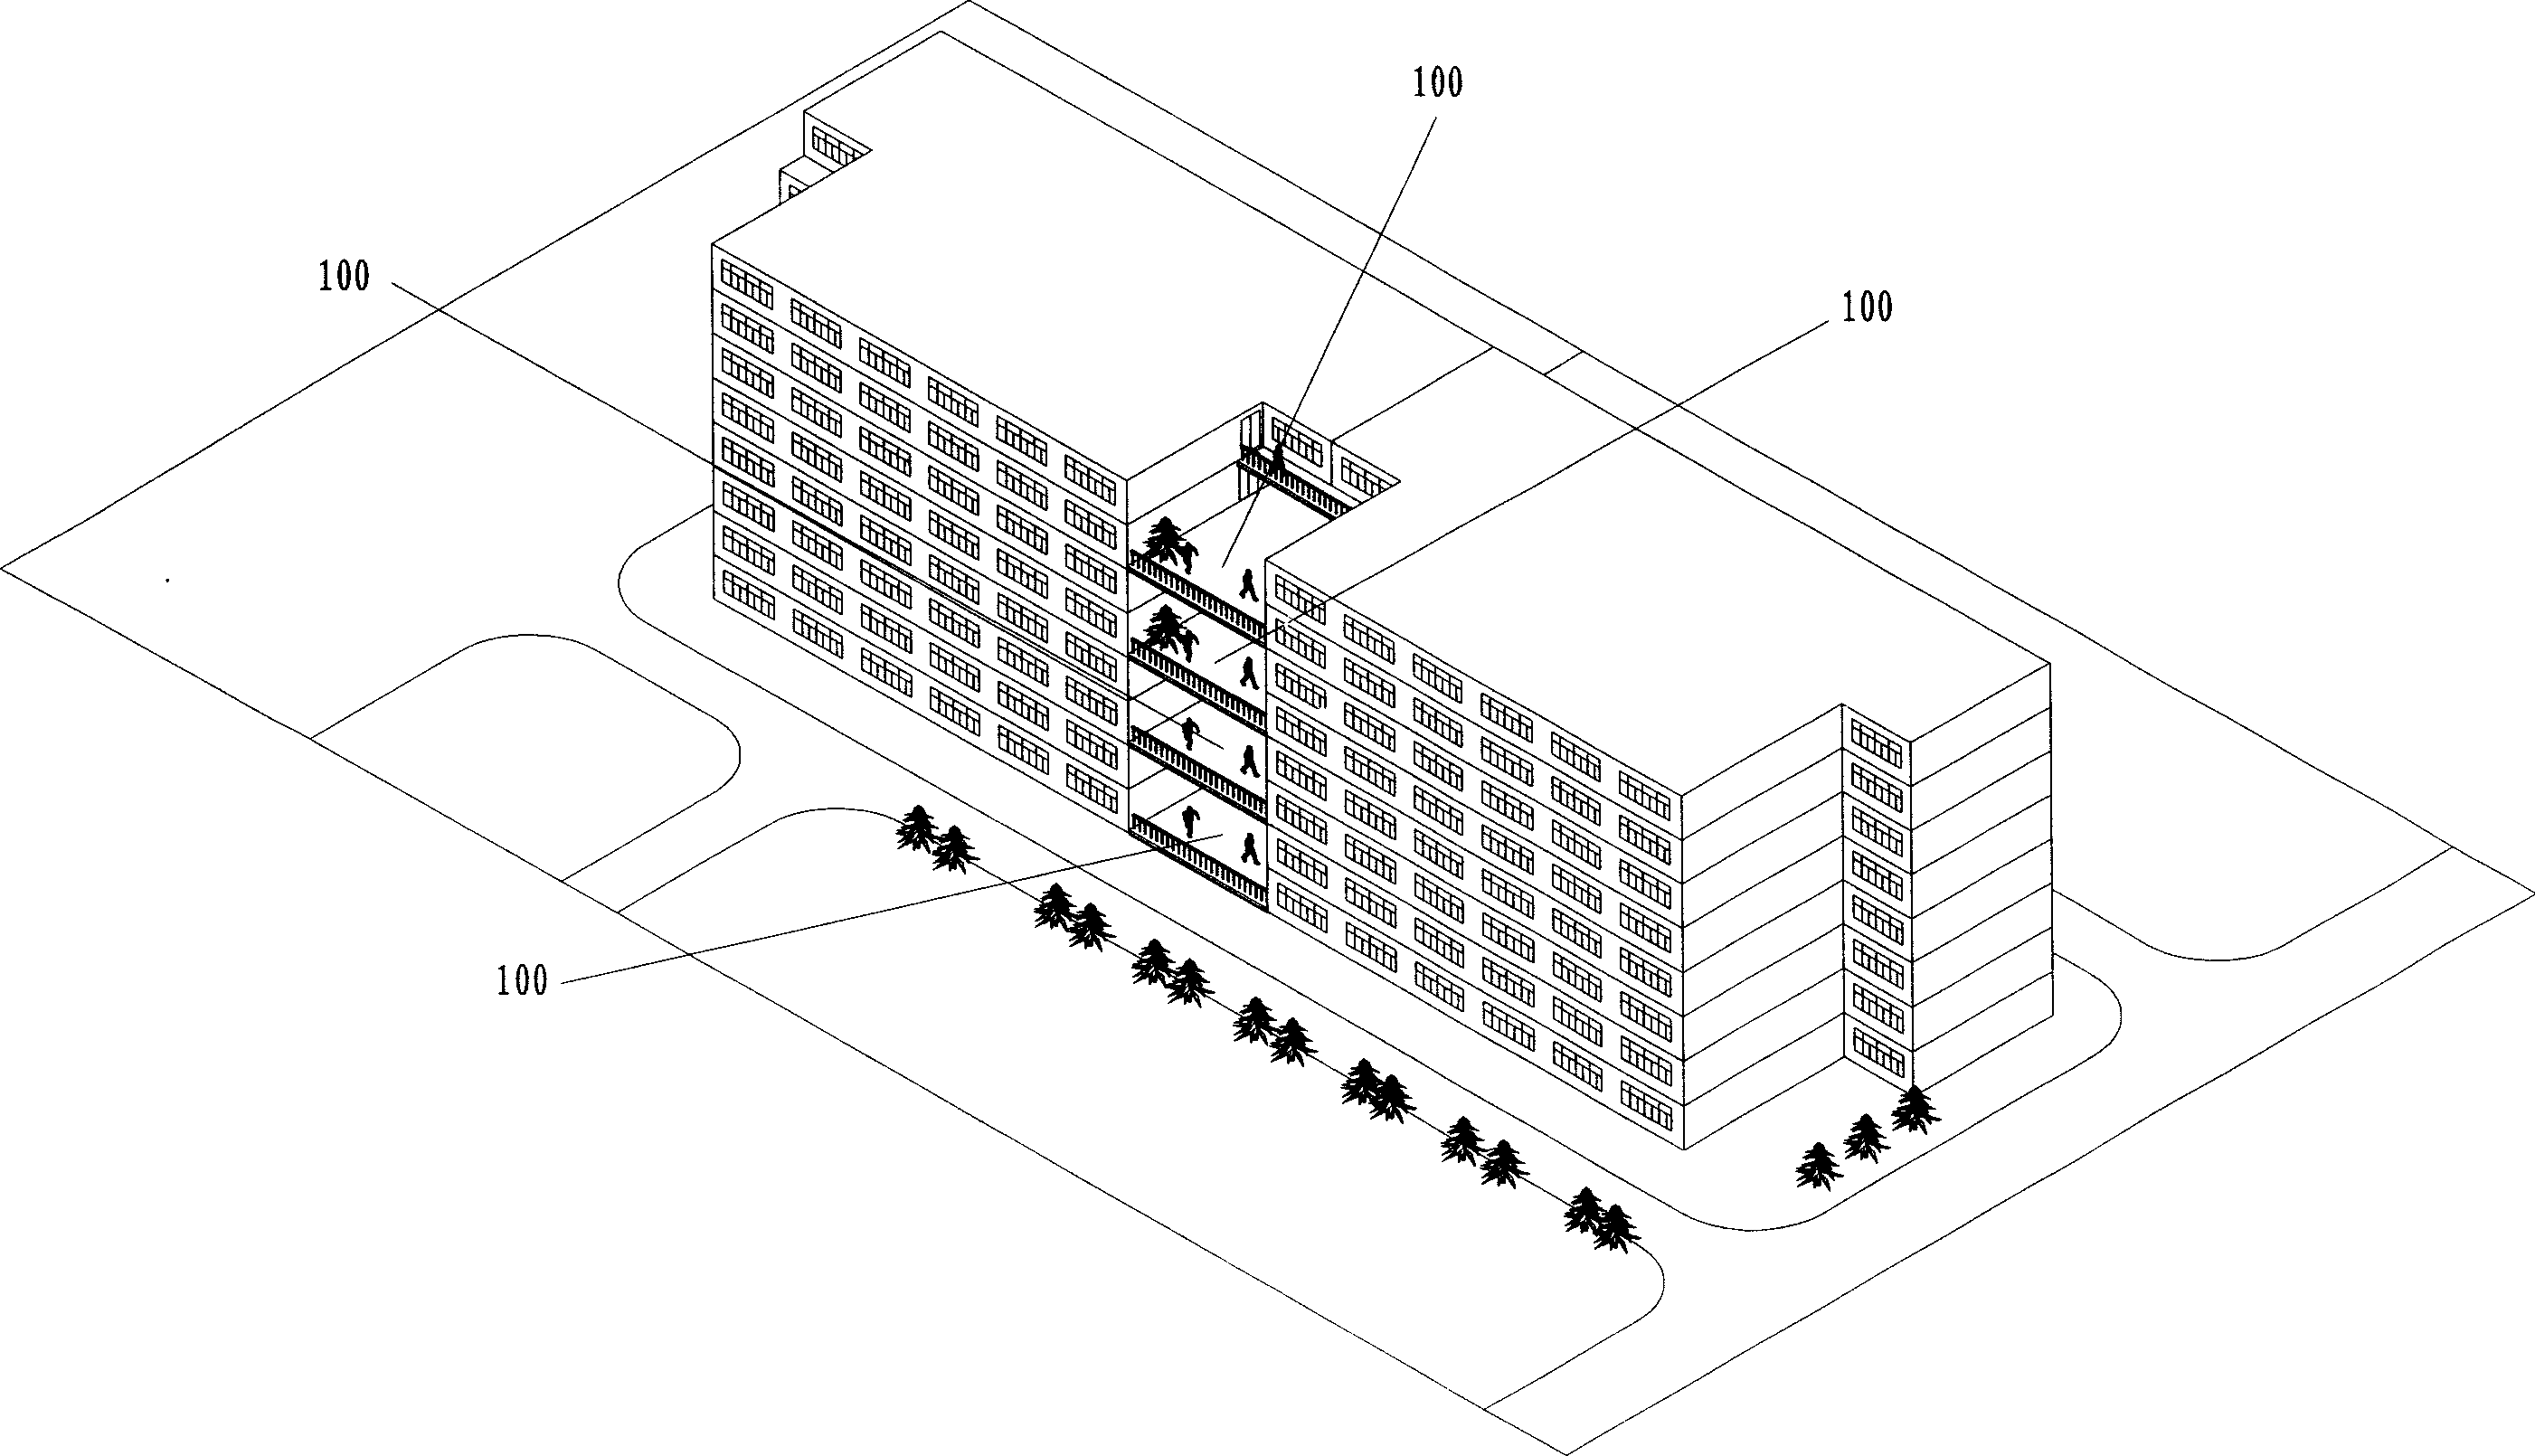 Multilayered or highrise building